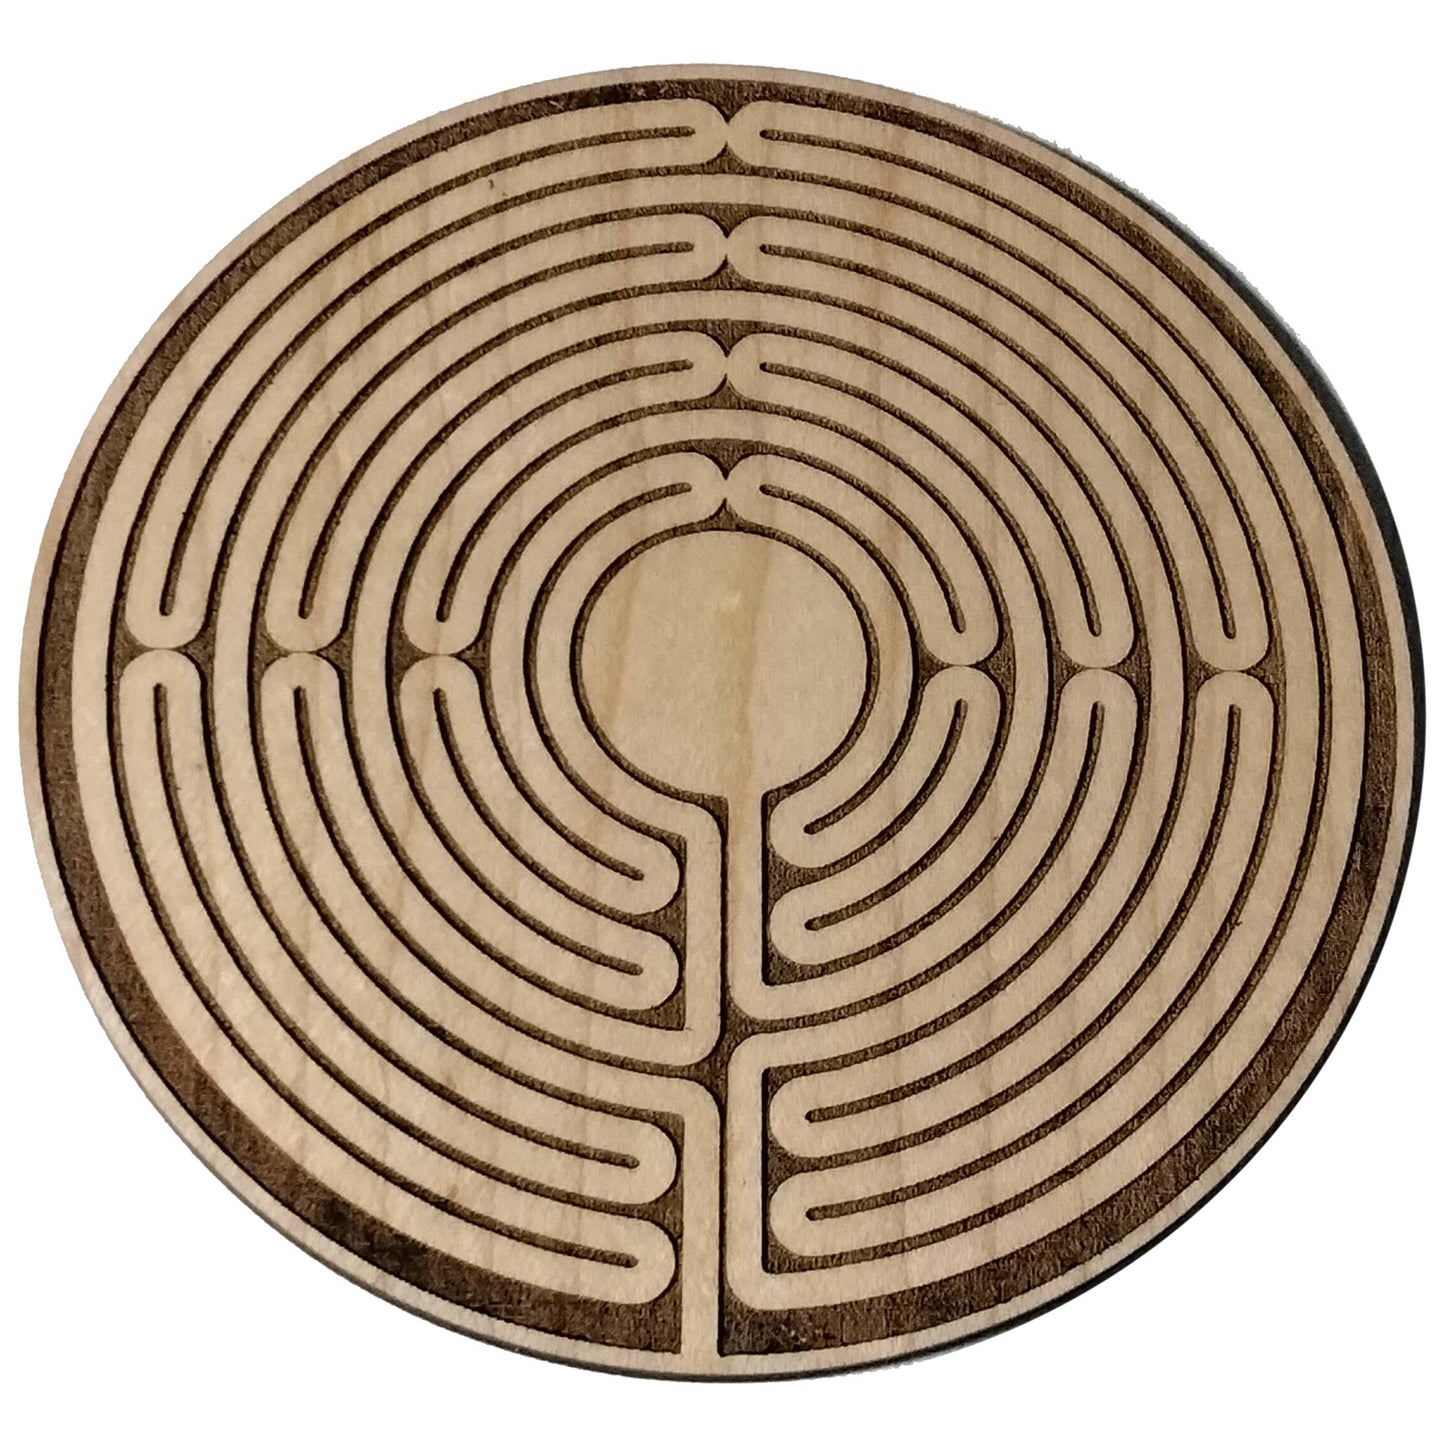 Amazing Labyrinth Coaster